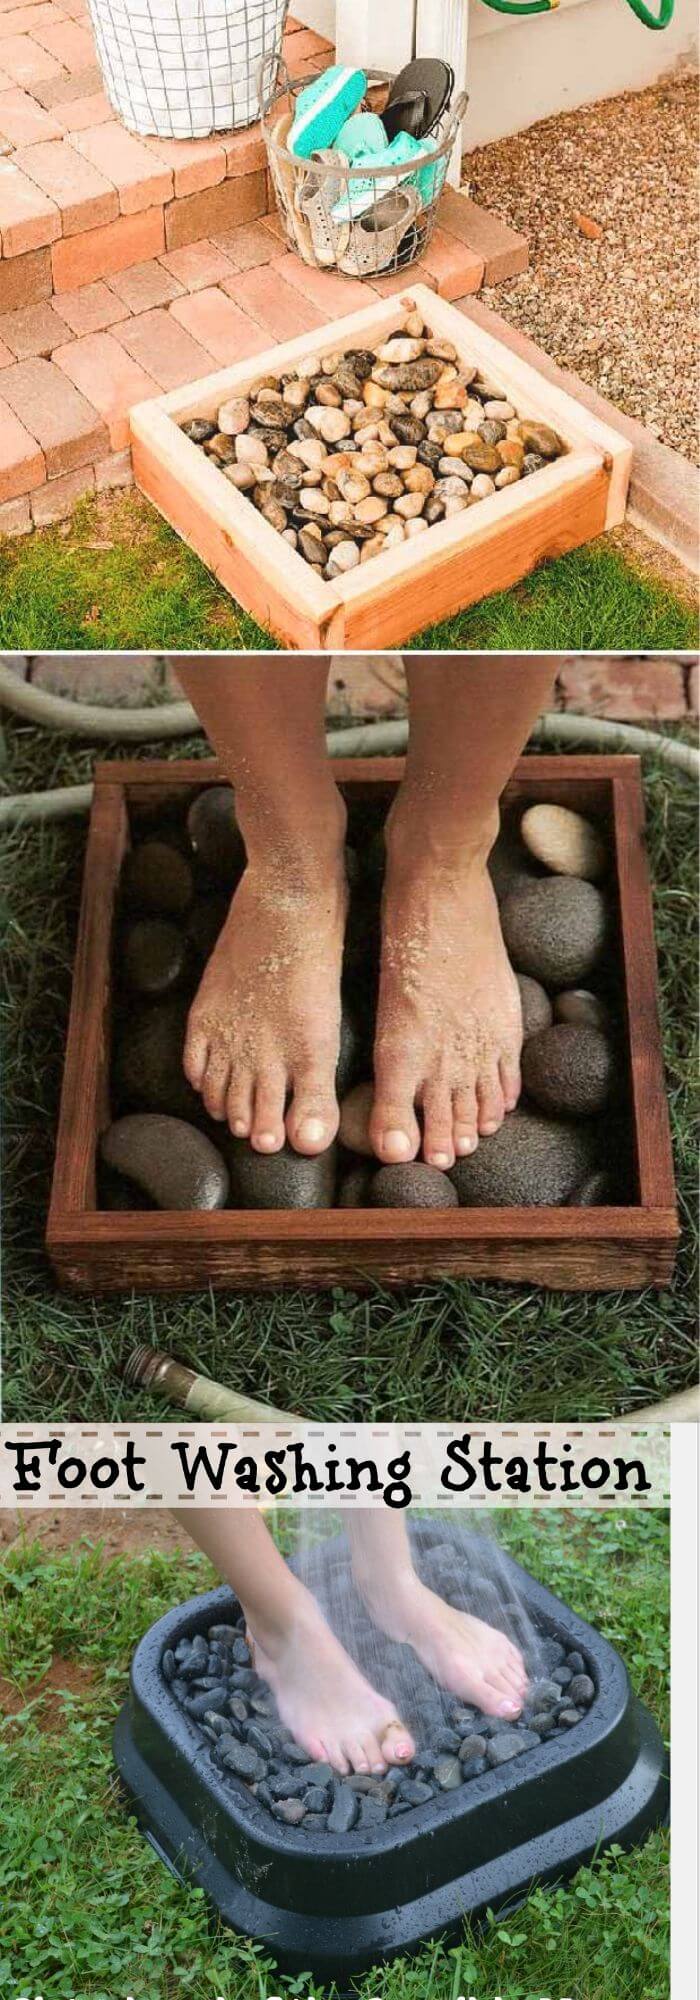 Foot washing station